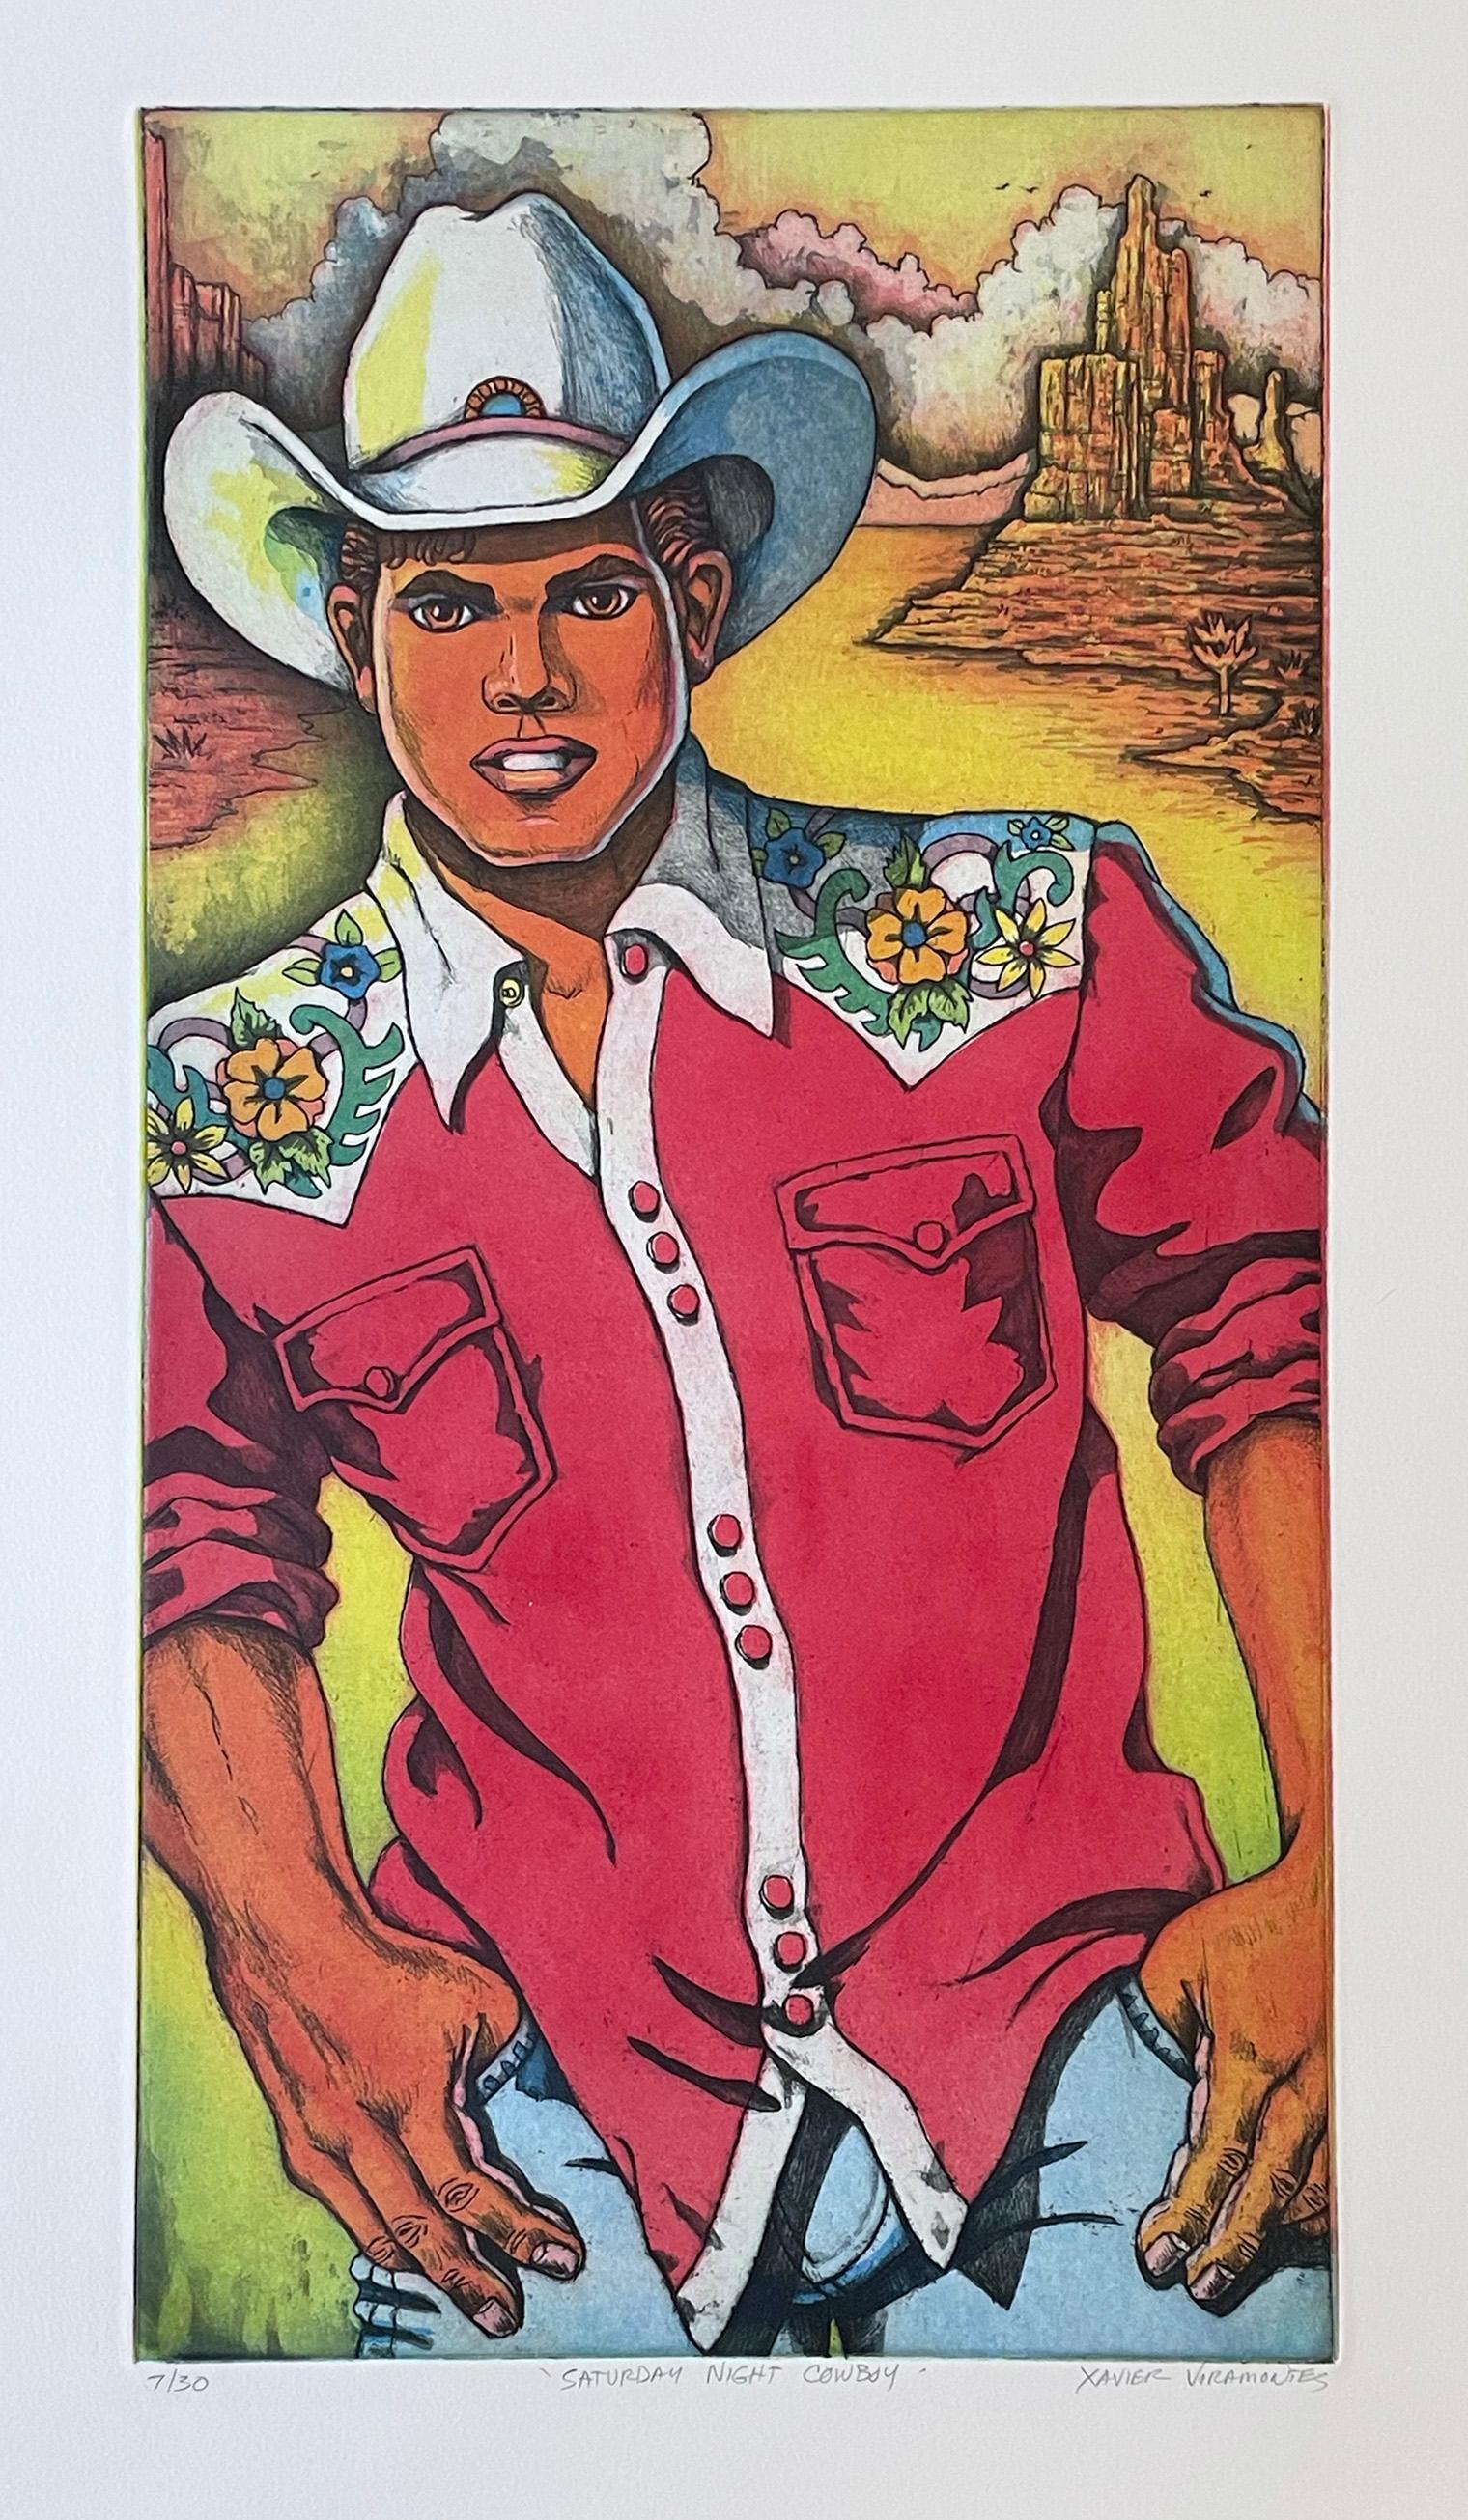 Saturday Night Cowboy - Print by Xavier Viramontes